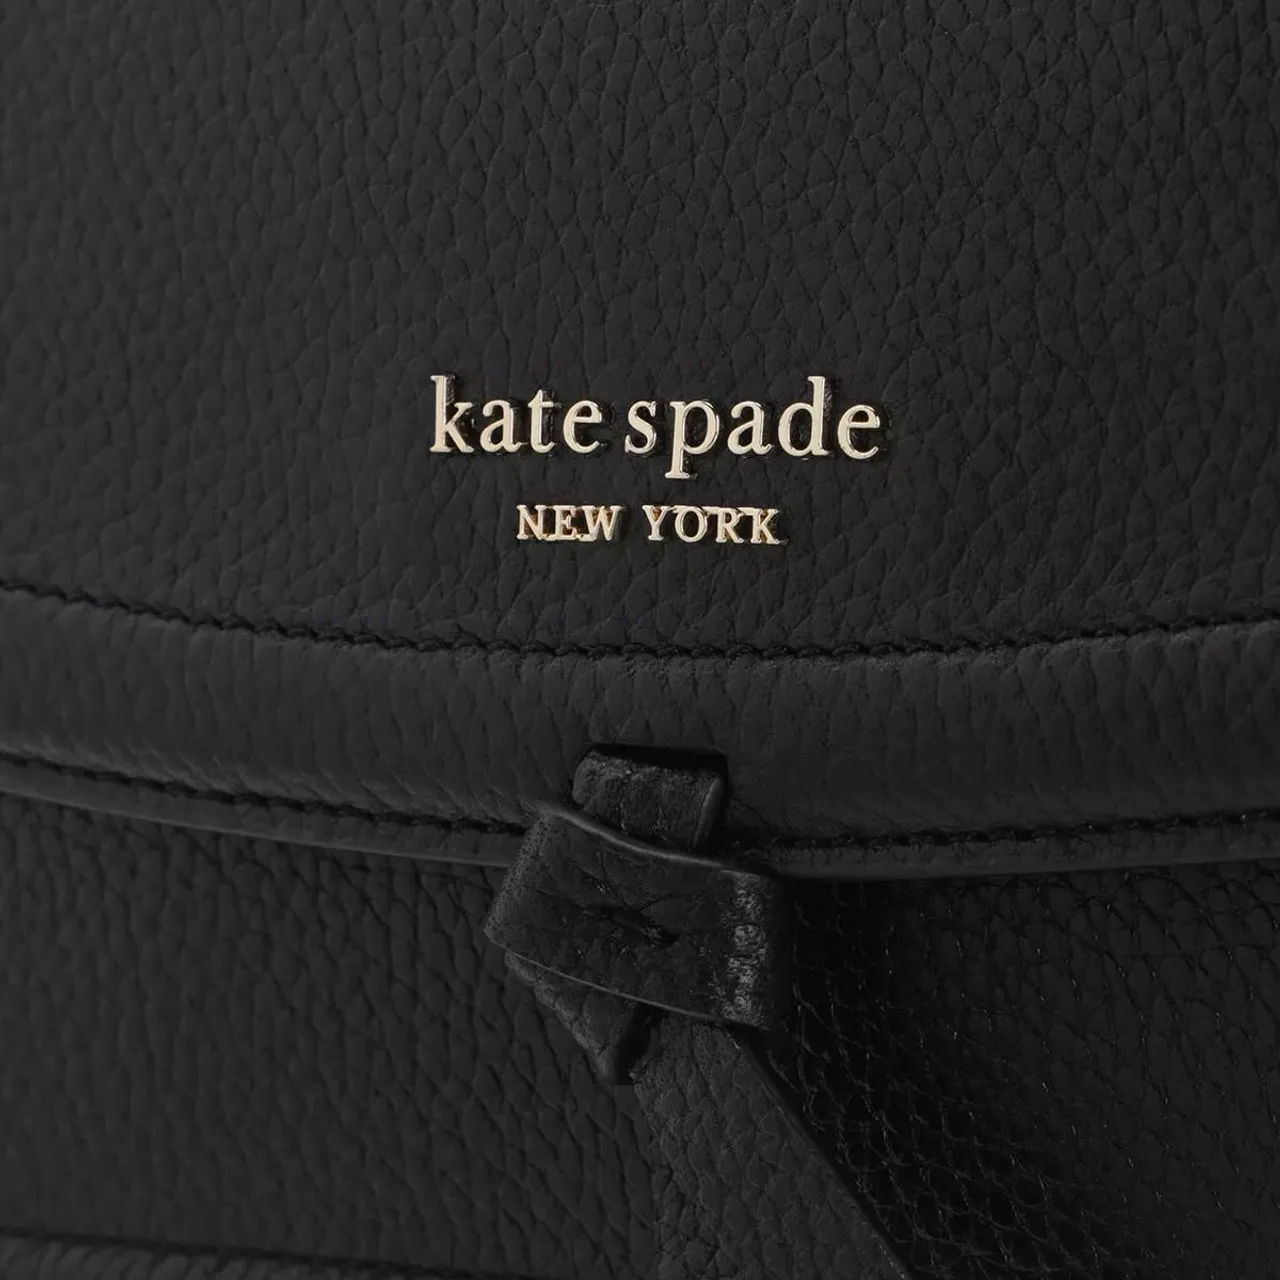 Kate Spade New York Crossbody Bags - Knott Pebbled Leather - black - Crossbody Bags for ladies